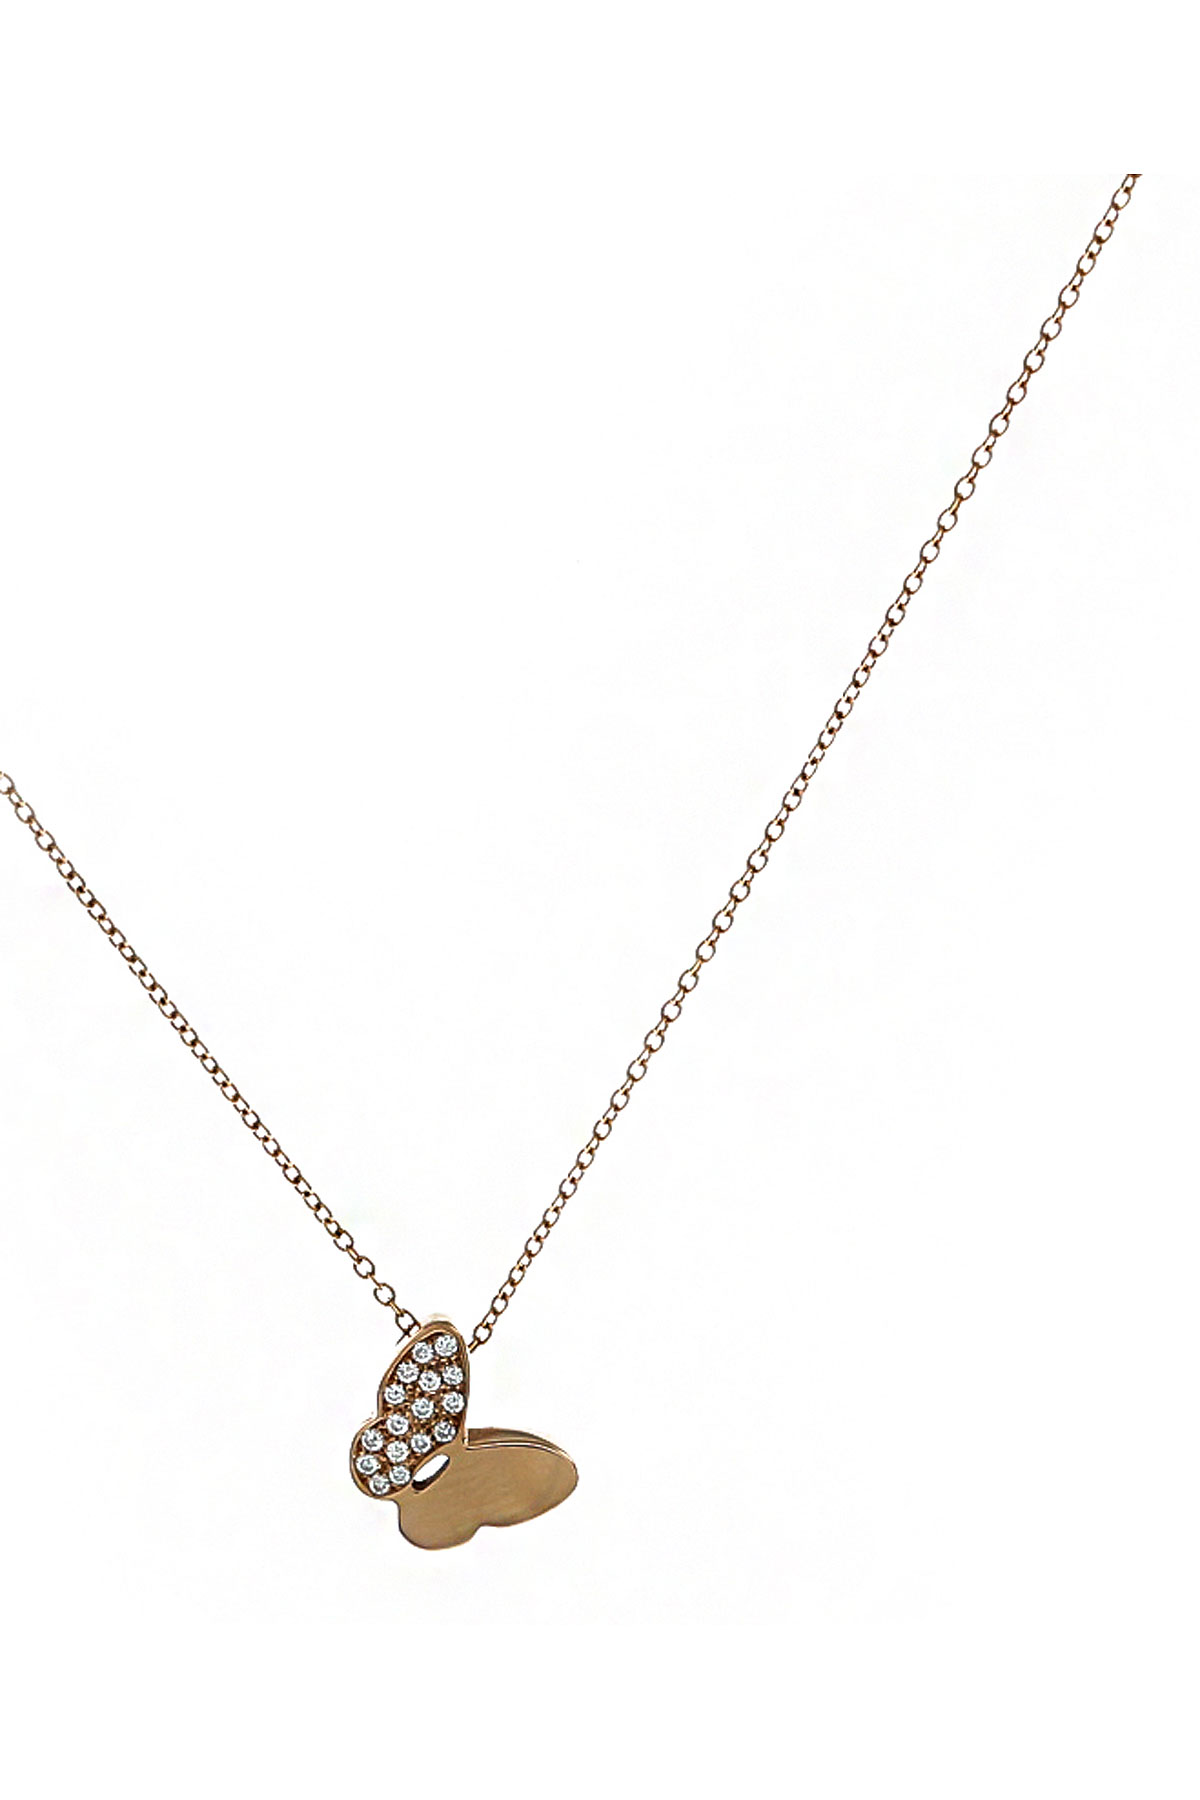 Italian Finest Jewelry Halskette für Damen, Rosengold, !8 Kt Rosengold, 2017